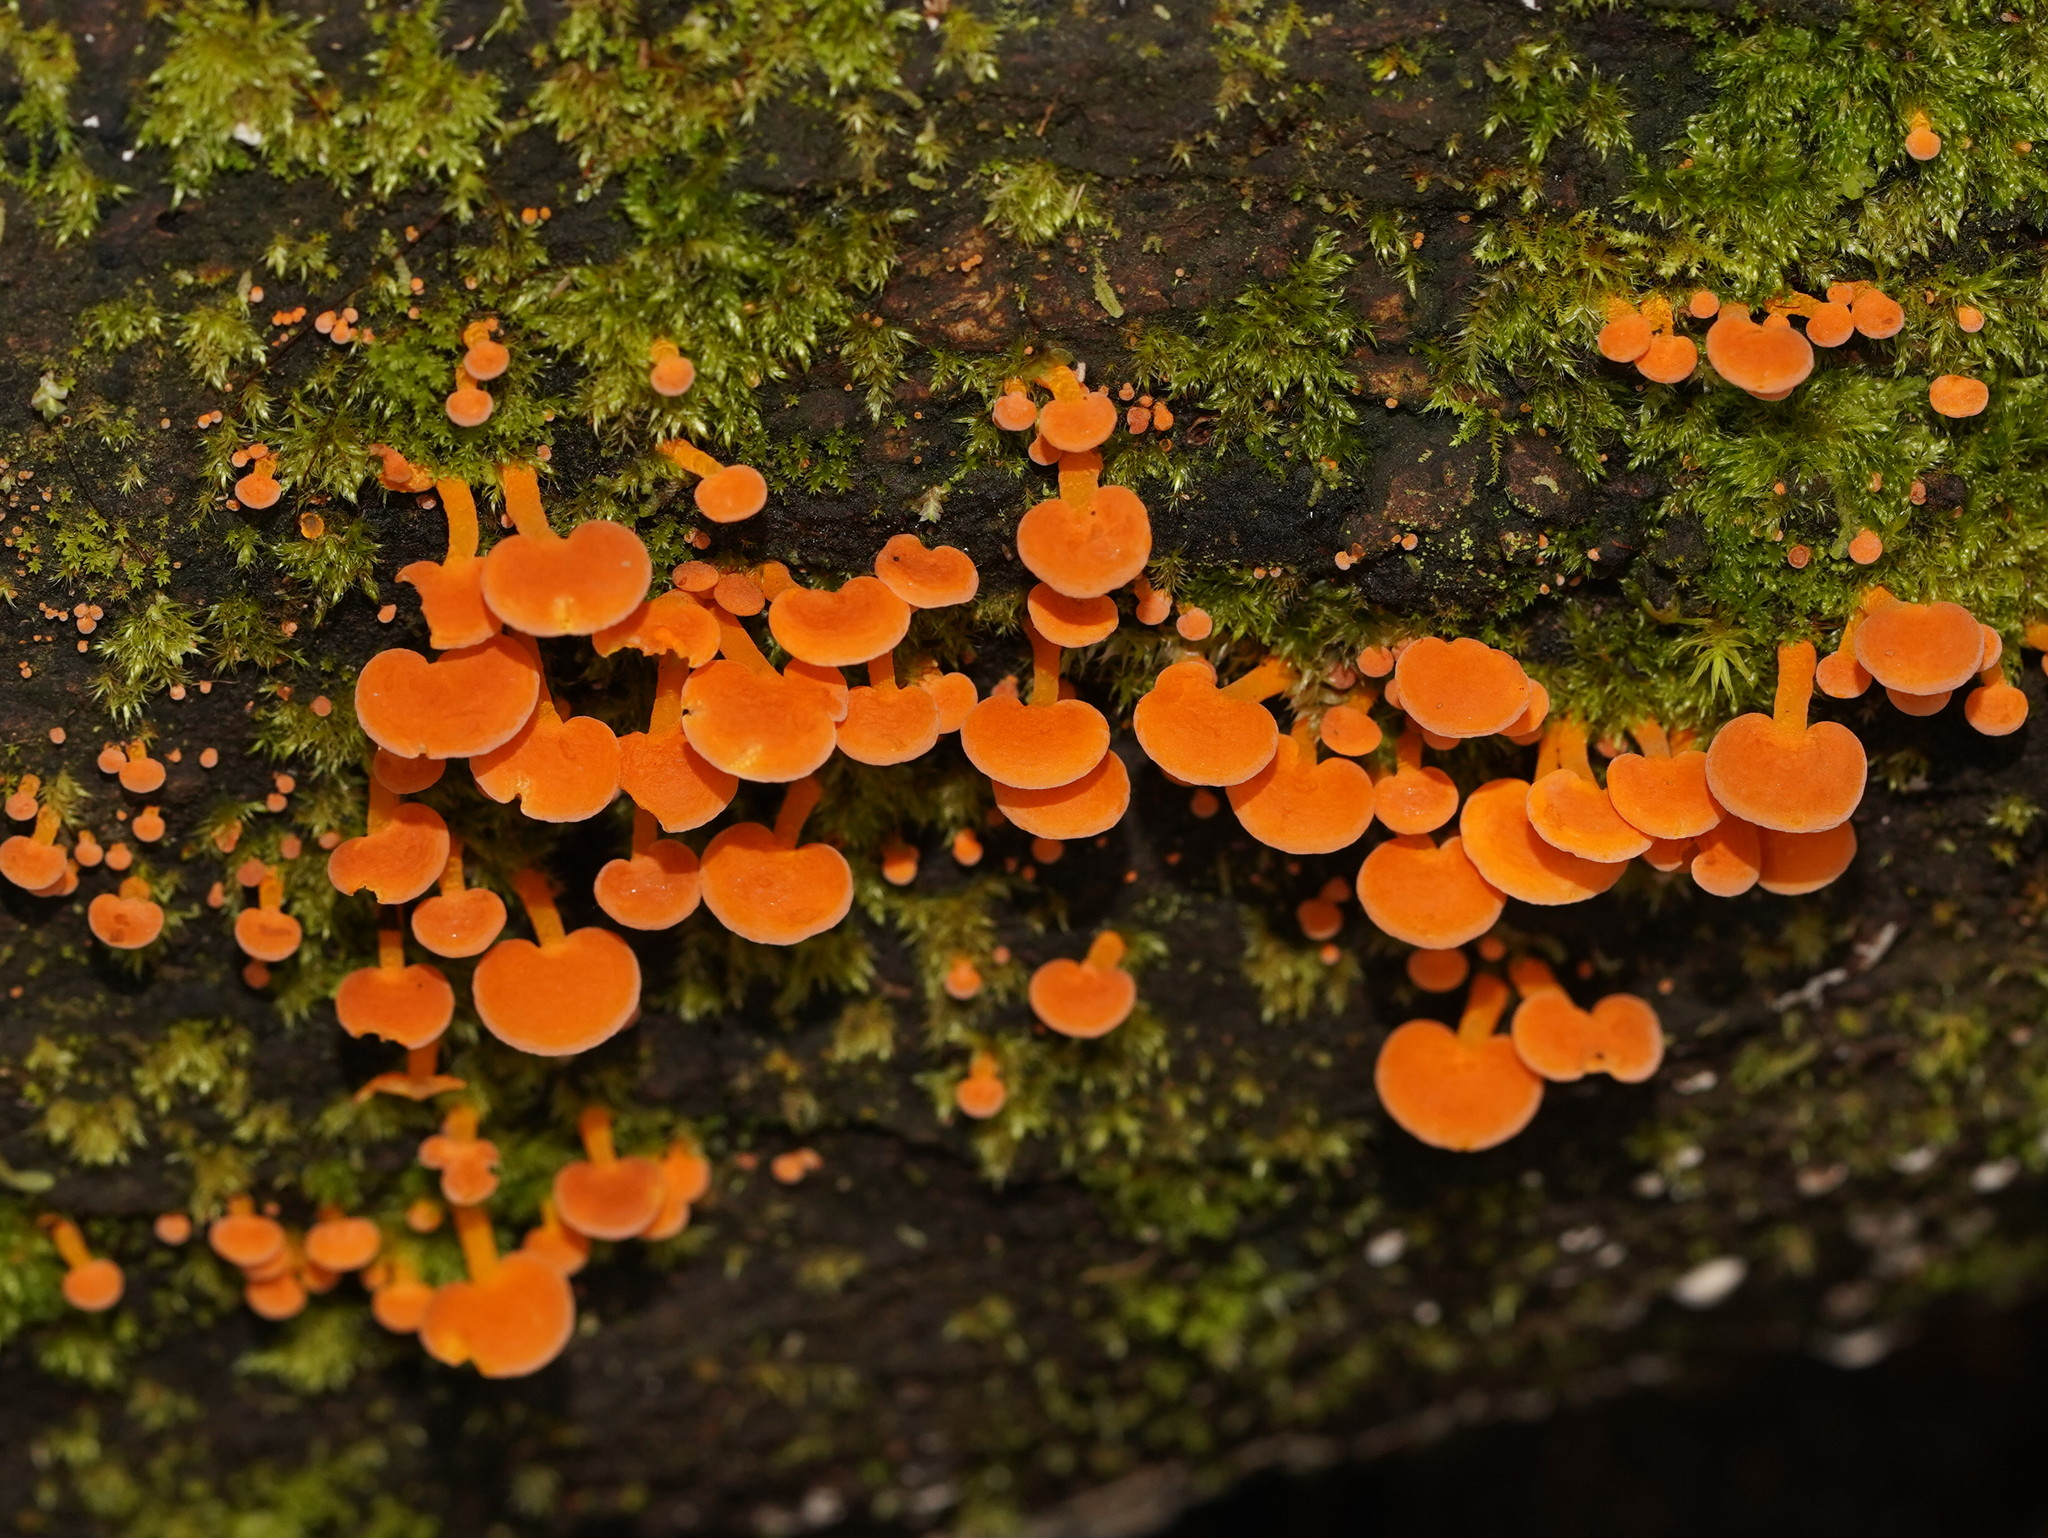 Eliminate an orange mushroom naturally